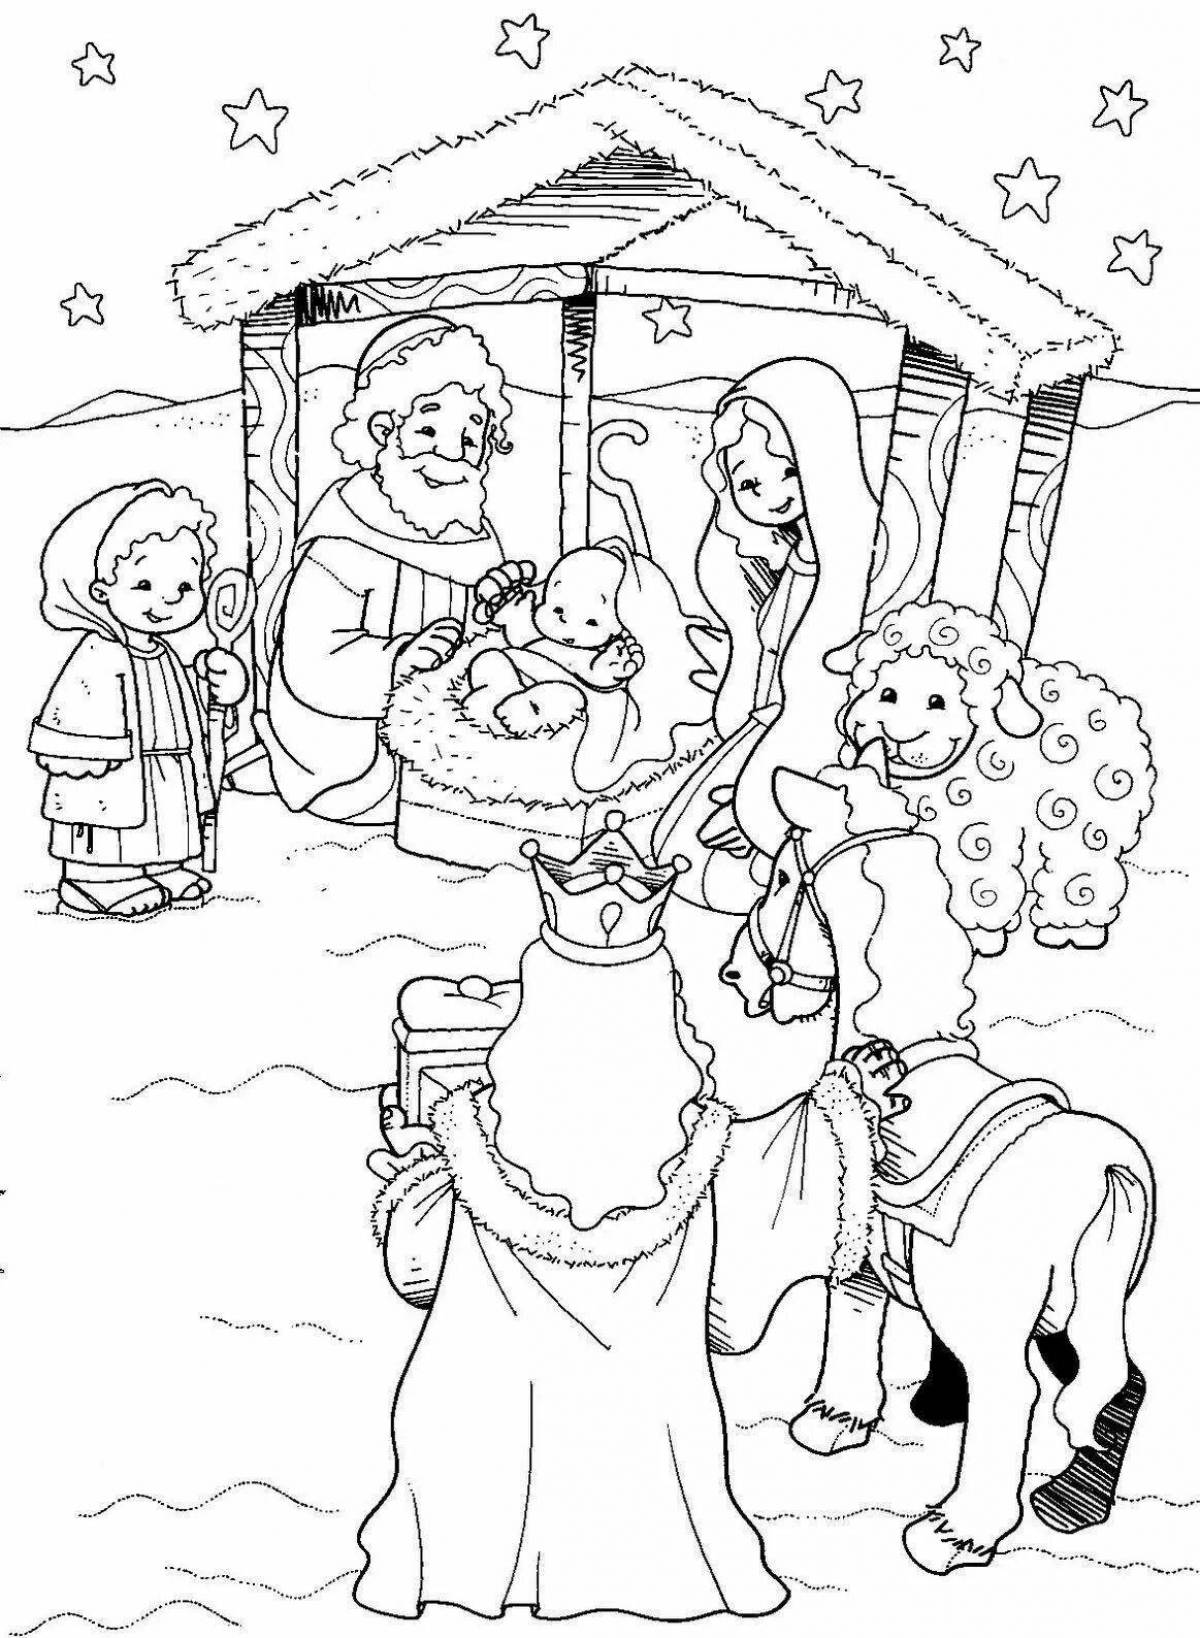 Playful Christmas coloring book